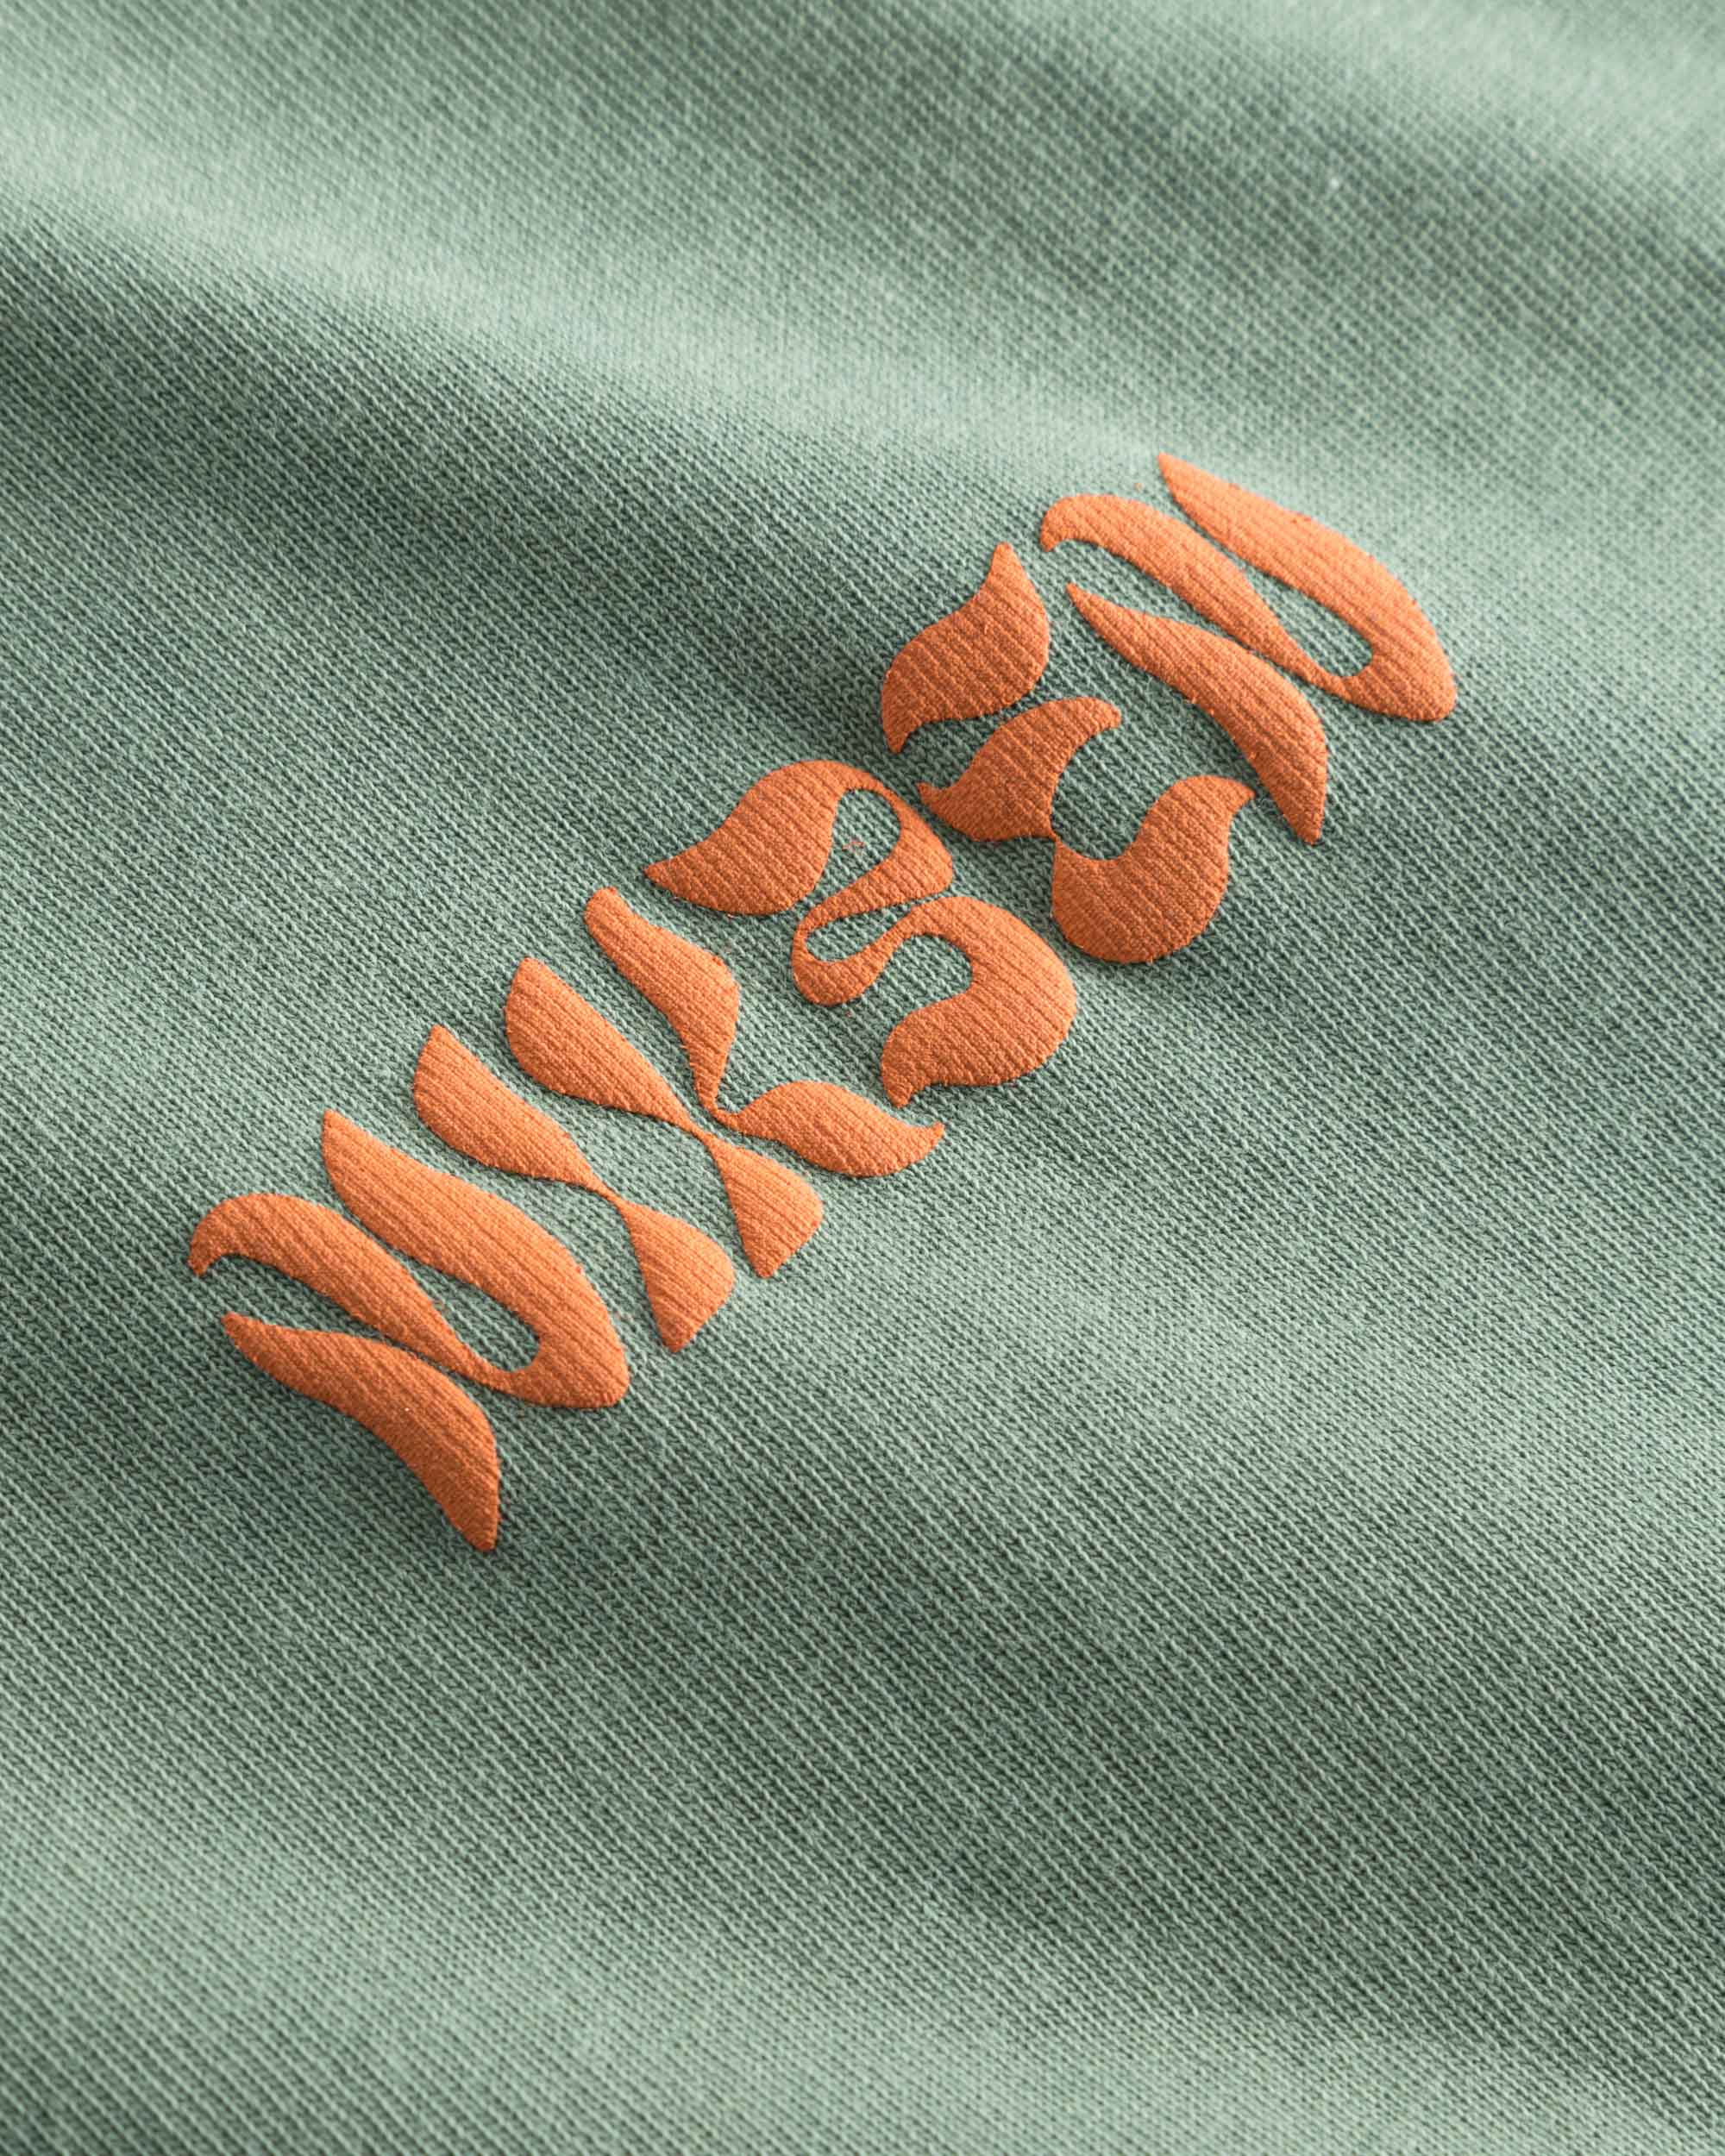 Orange puffy "Nikben" logo on a green t-shirt.